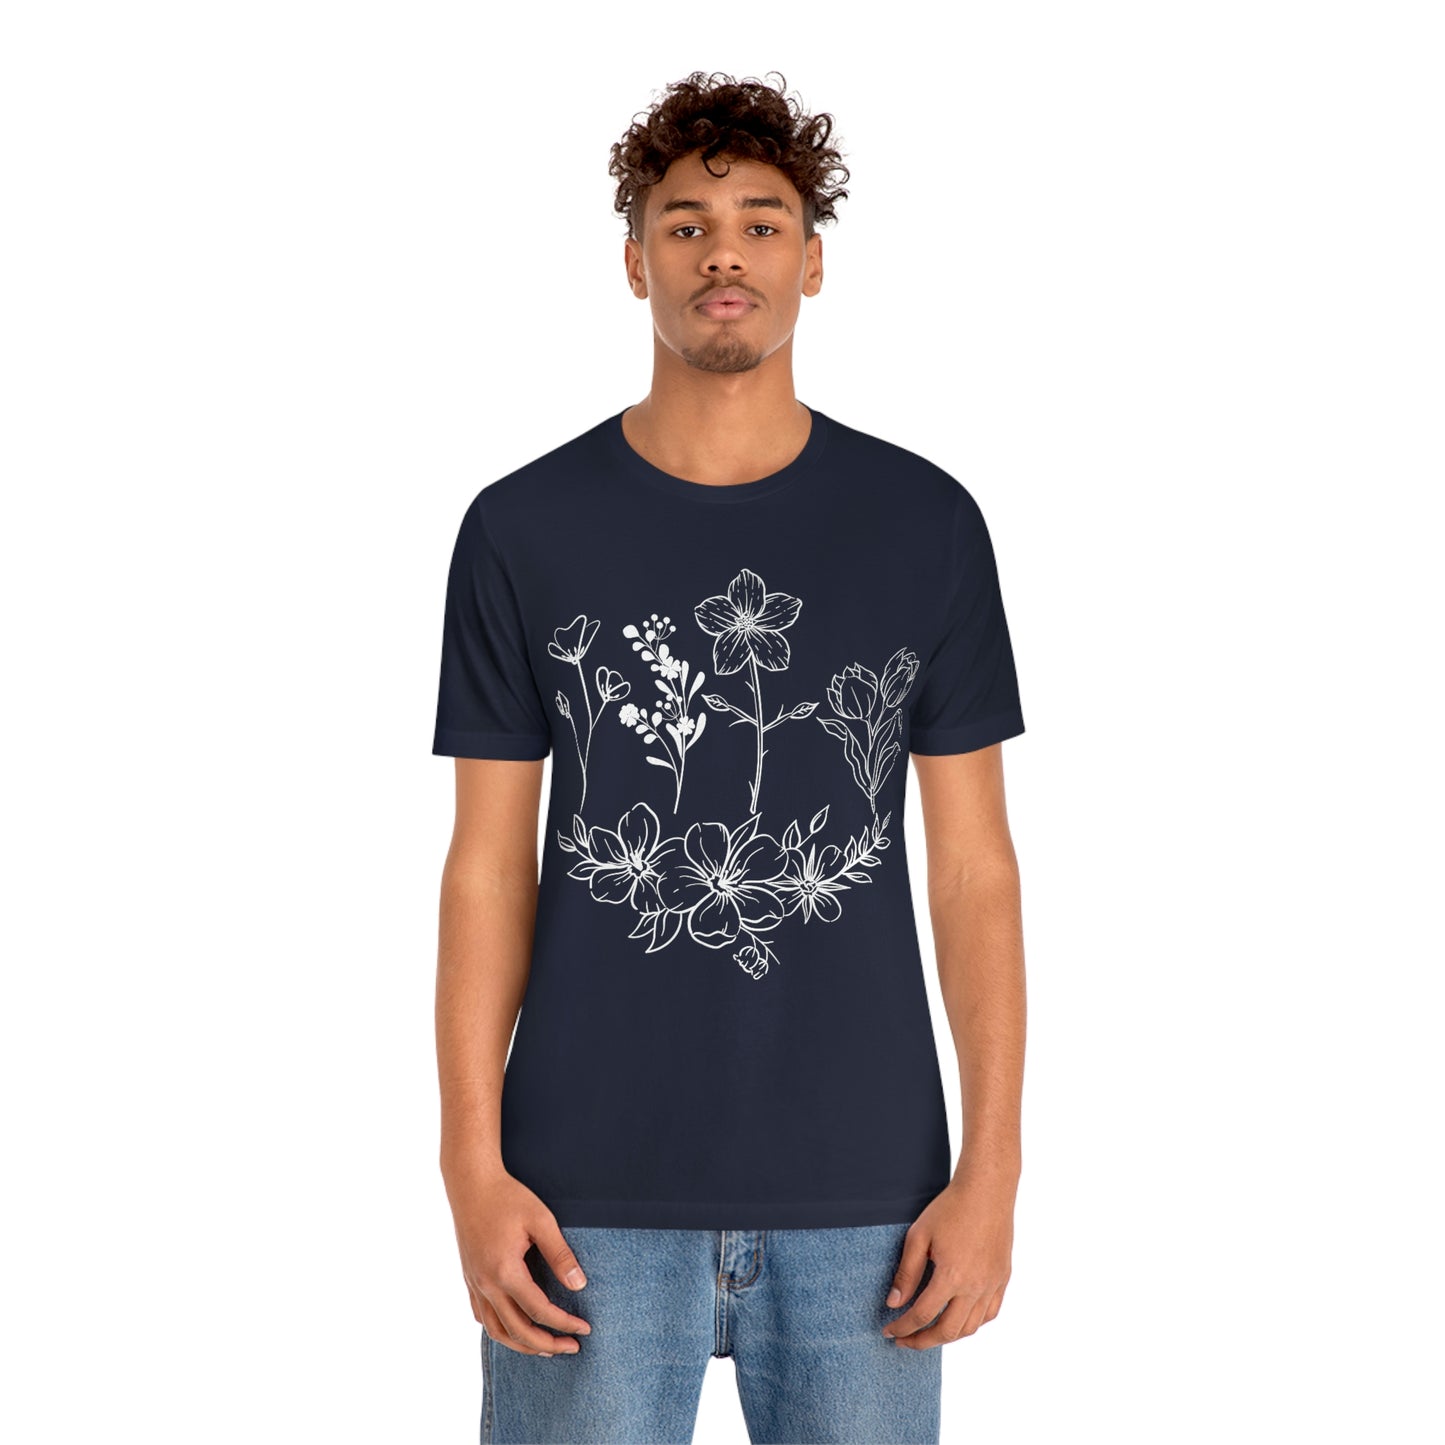 Flower Tshirt - Nature lover Shirt